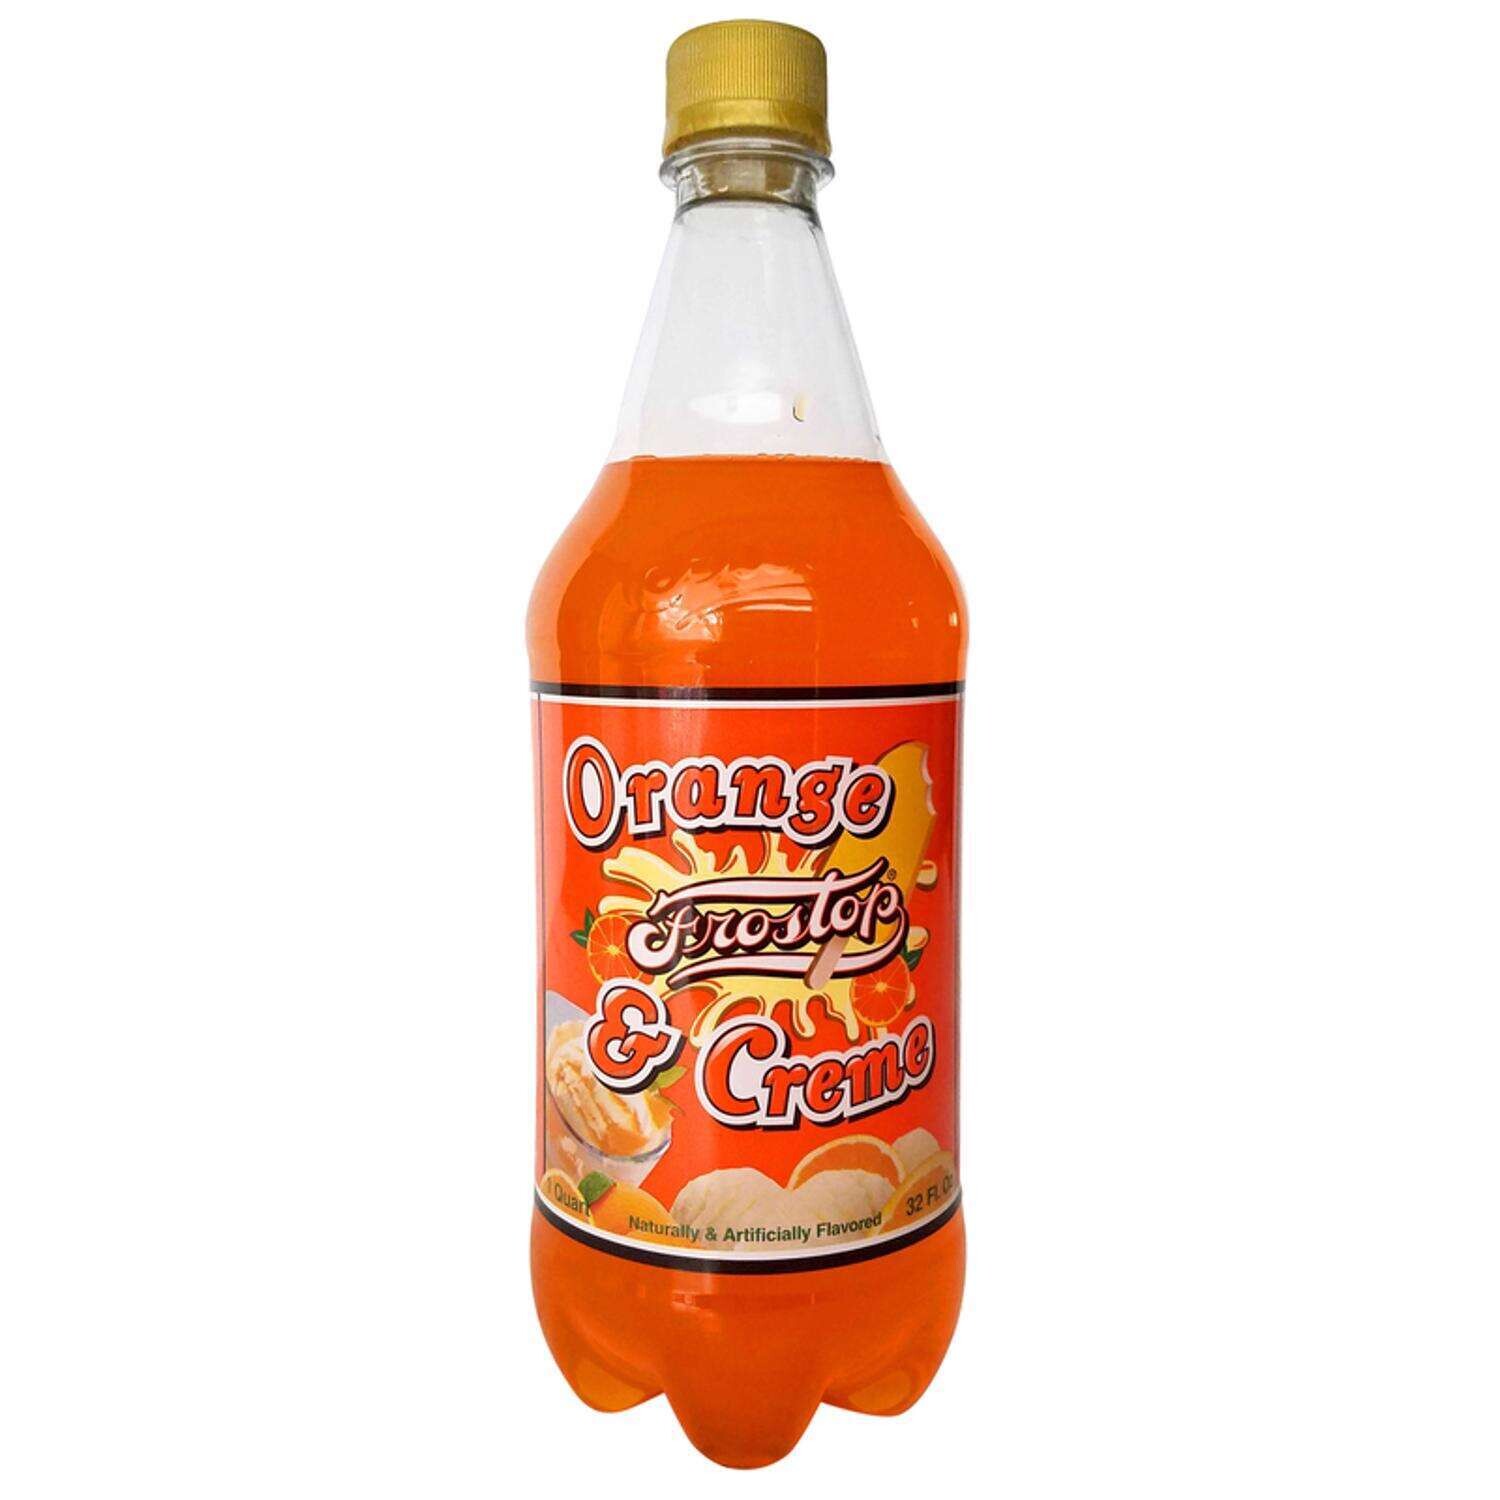 Orange and Creme Frostop $1.89